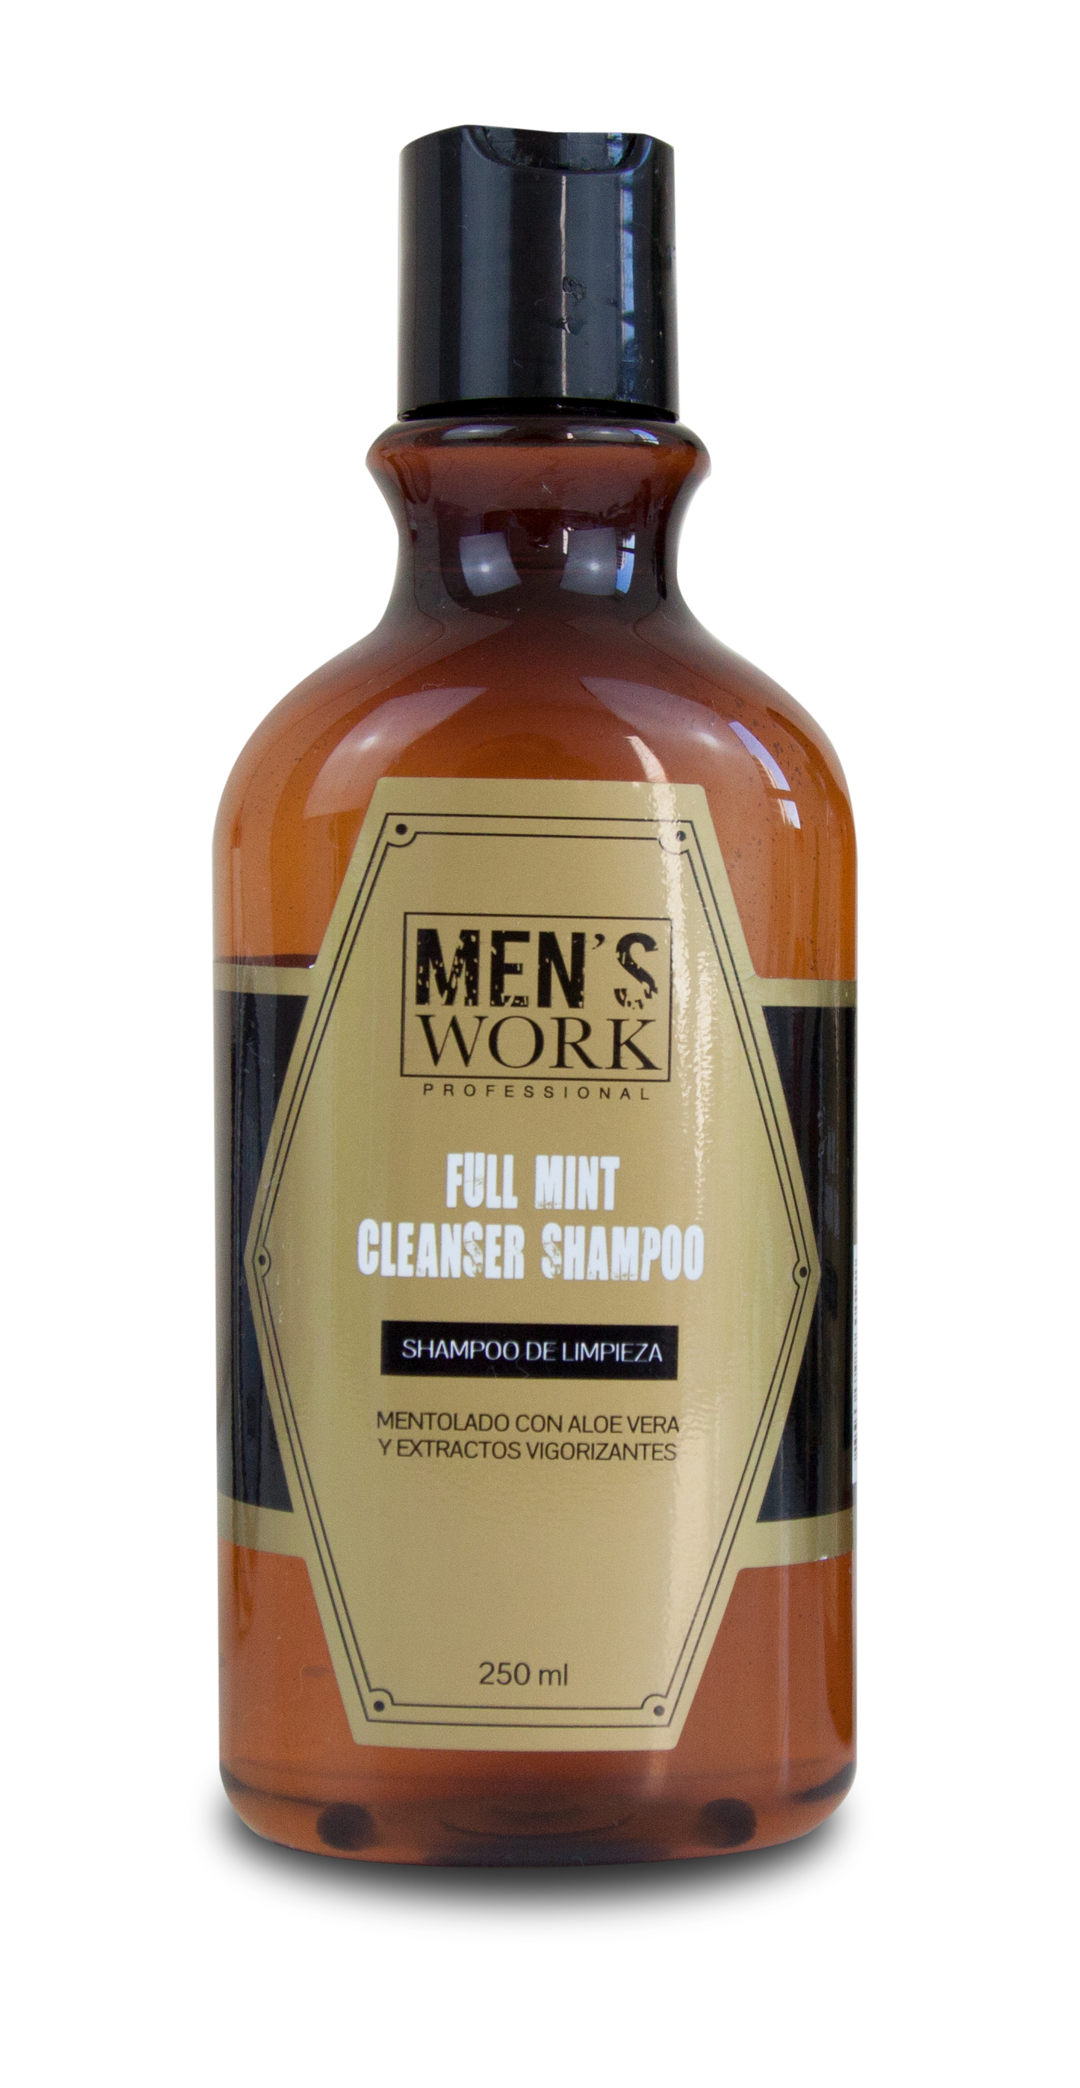 MEN'S WORK PROFESSIONAL SHAMPOO 250 ml